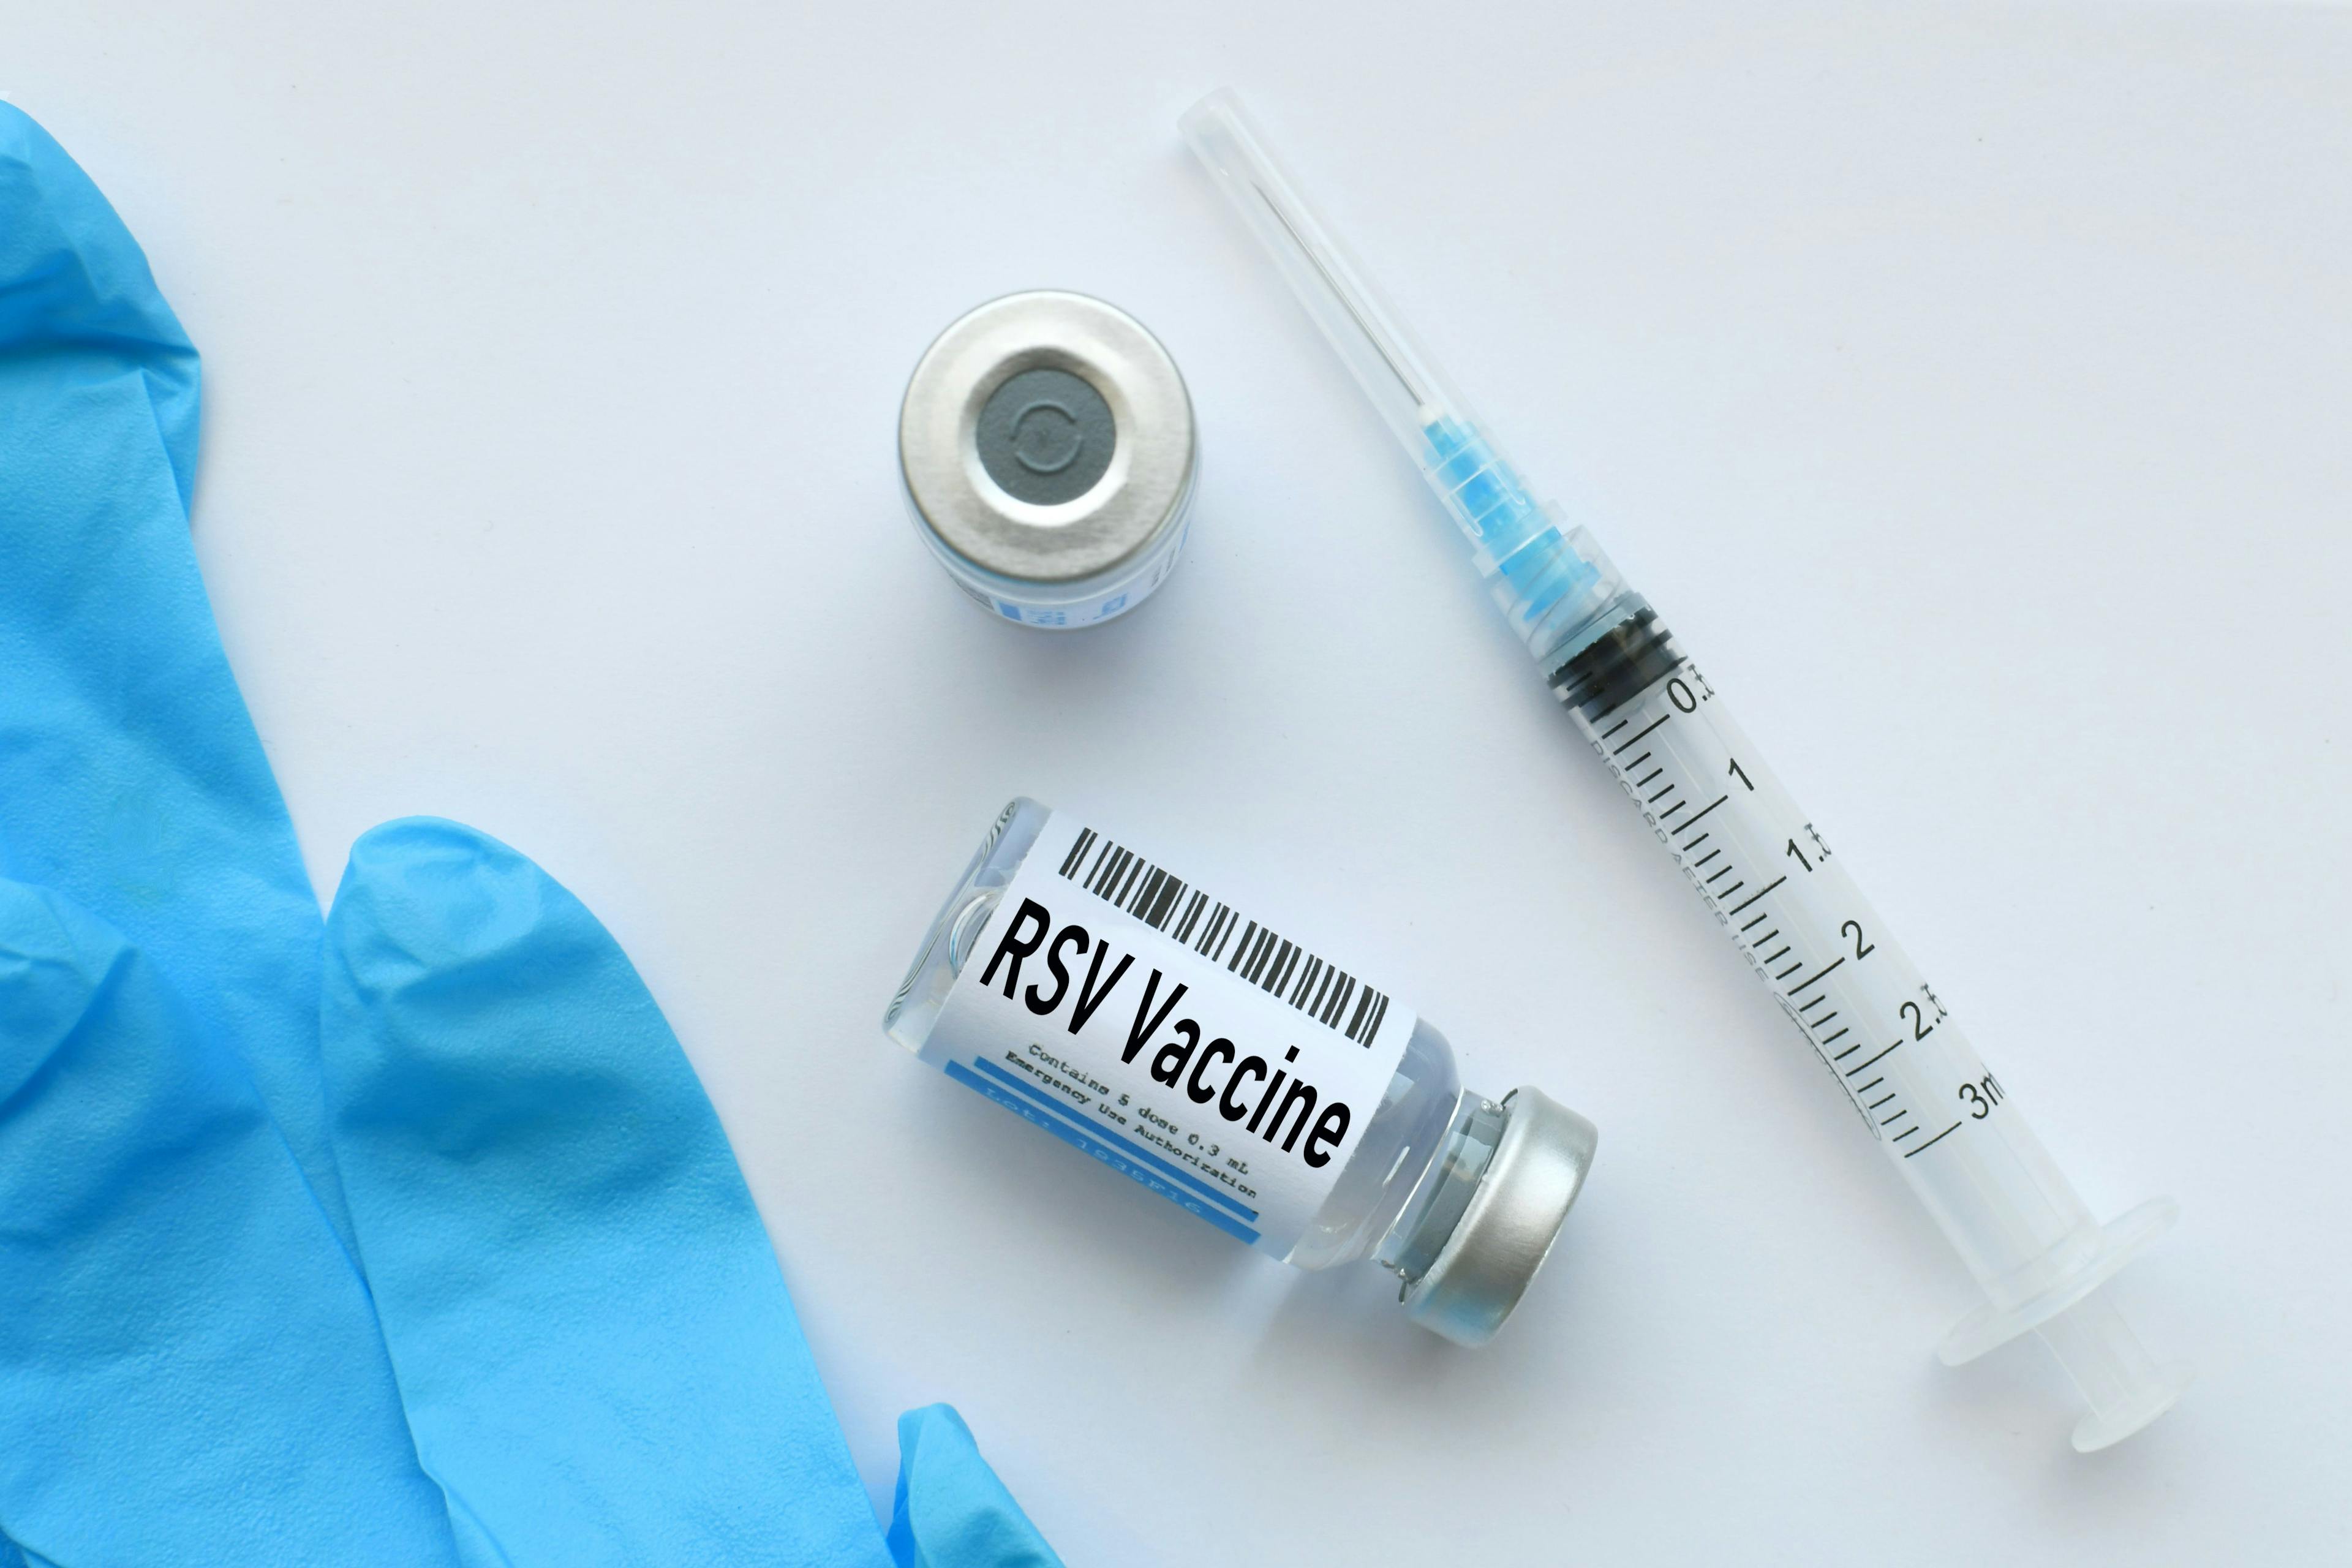 RSV vaccine vial with syringe - Respiratory syncytial virus shot - Image credit: MargJohnsonVA | stock.adobe.com